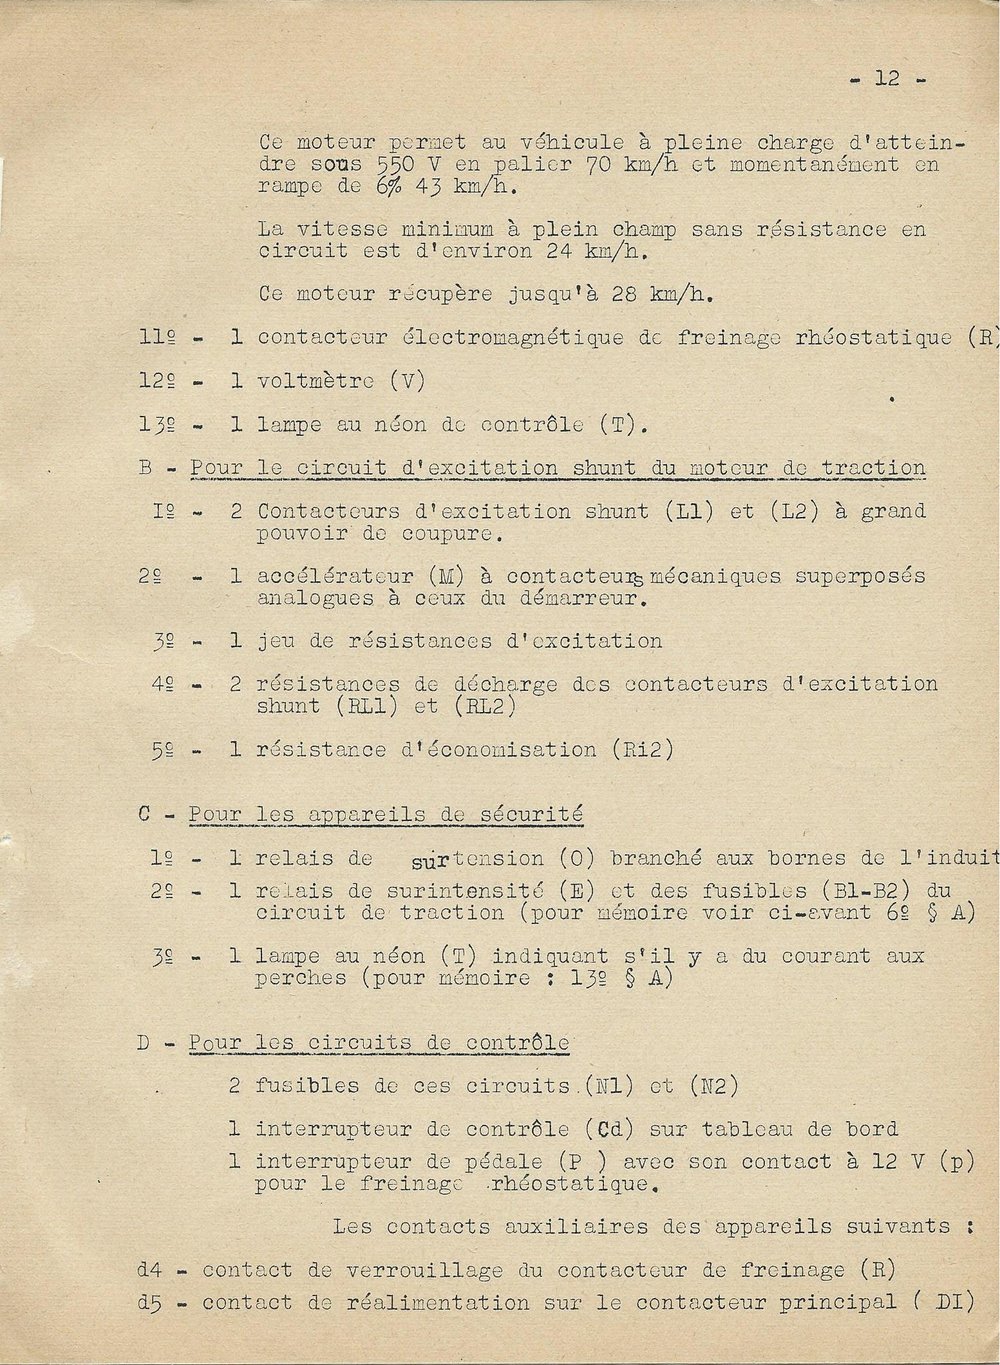  VRBh, série Aix-Marseille, str. 1 